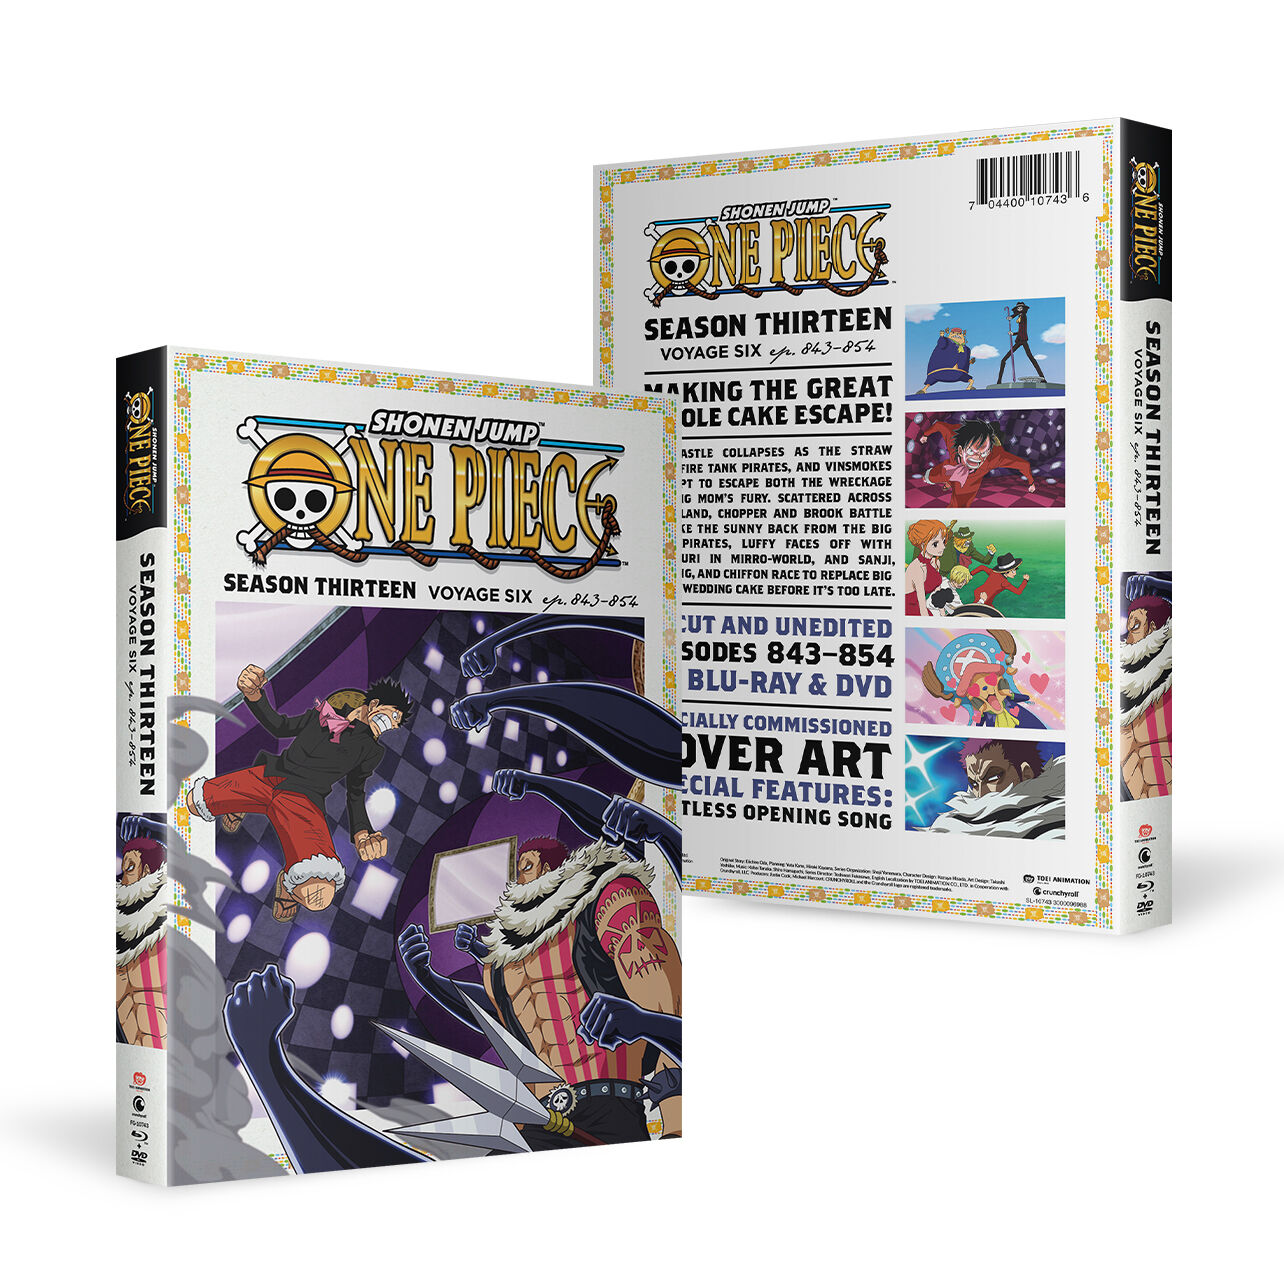 One Piece - Season 13 Voyage 6 - Blu-ray + DVD | Crunchyroll Store